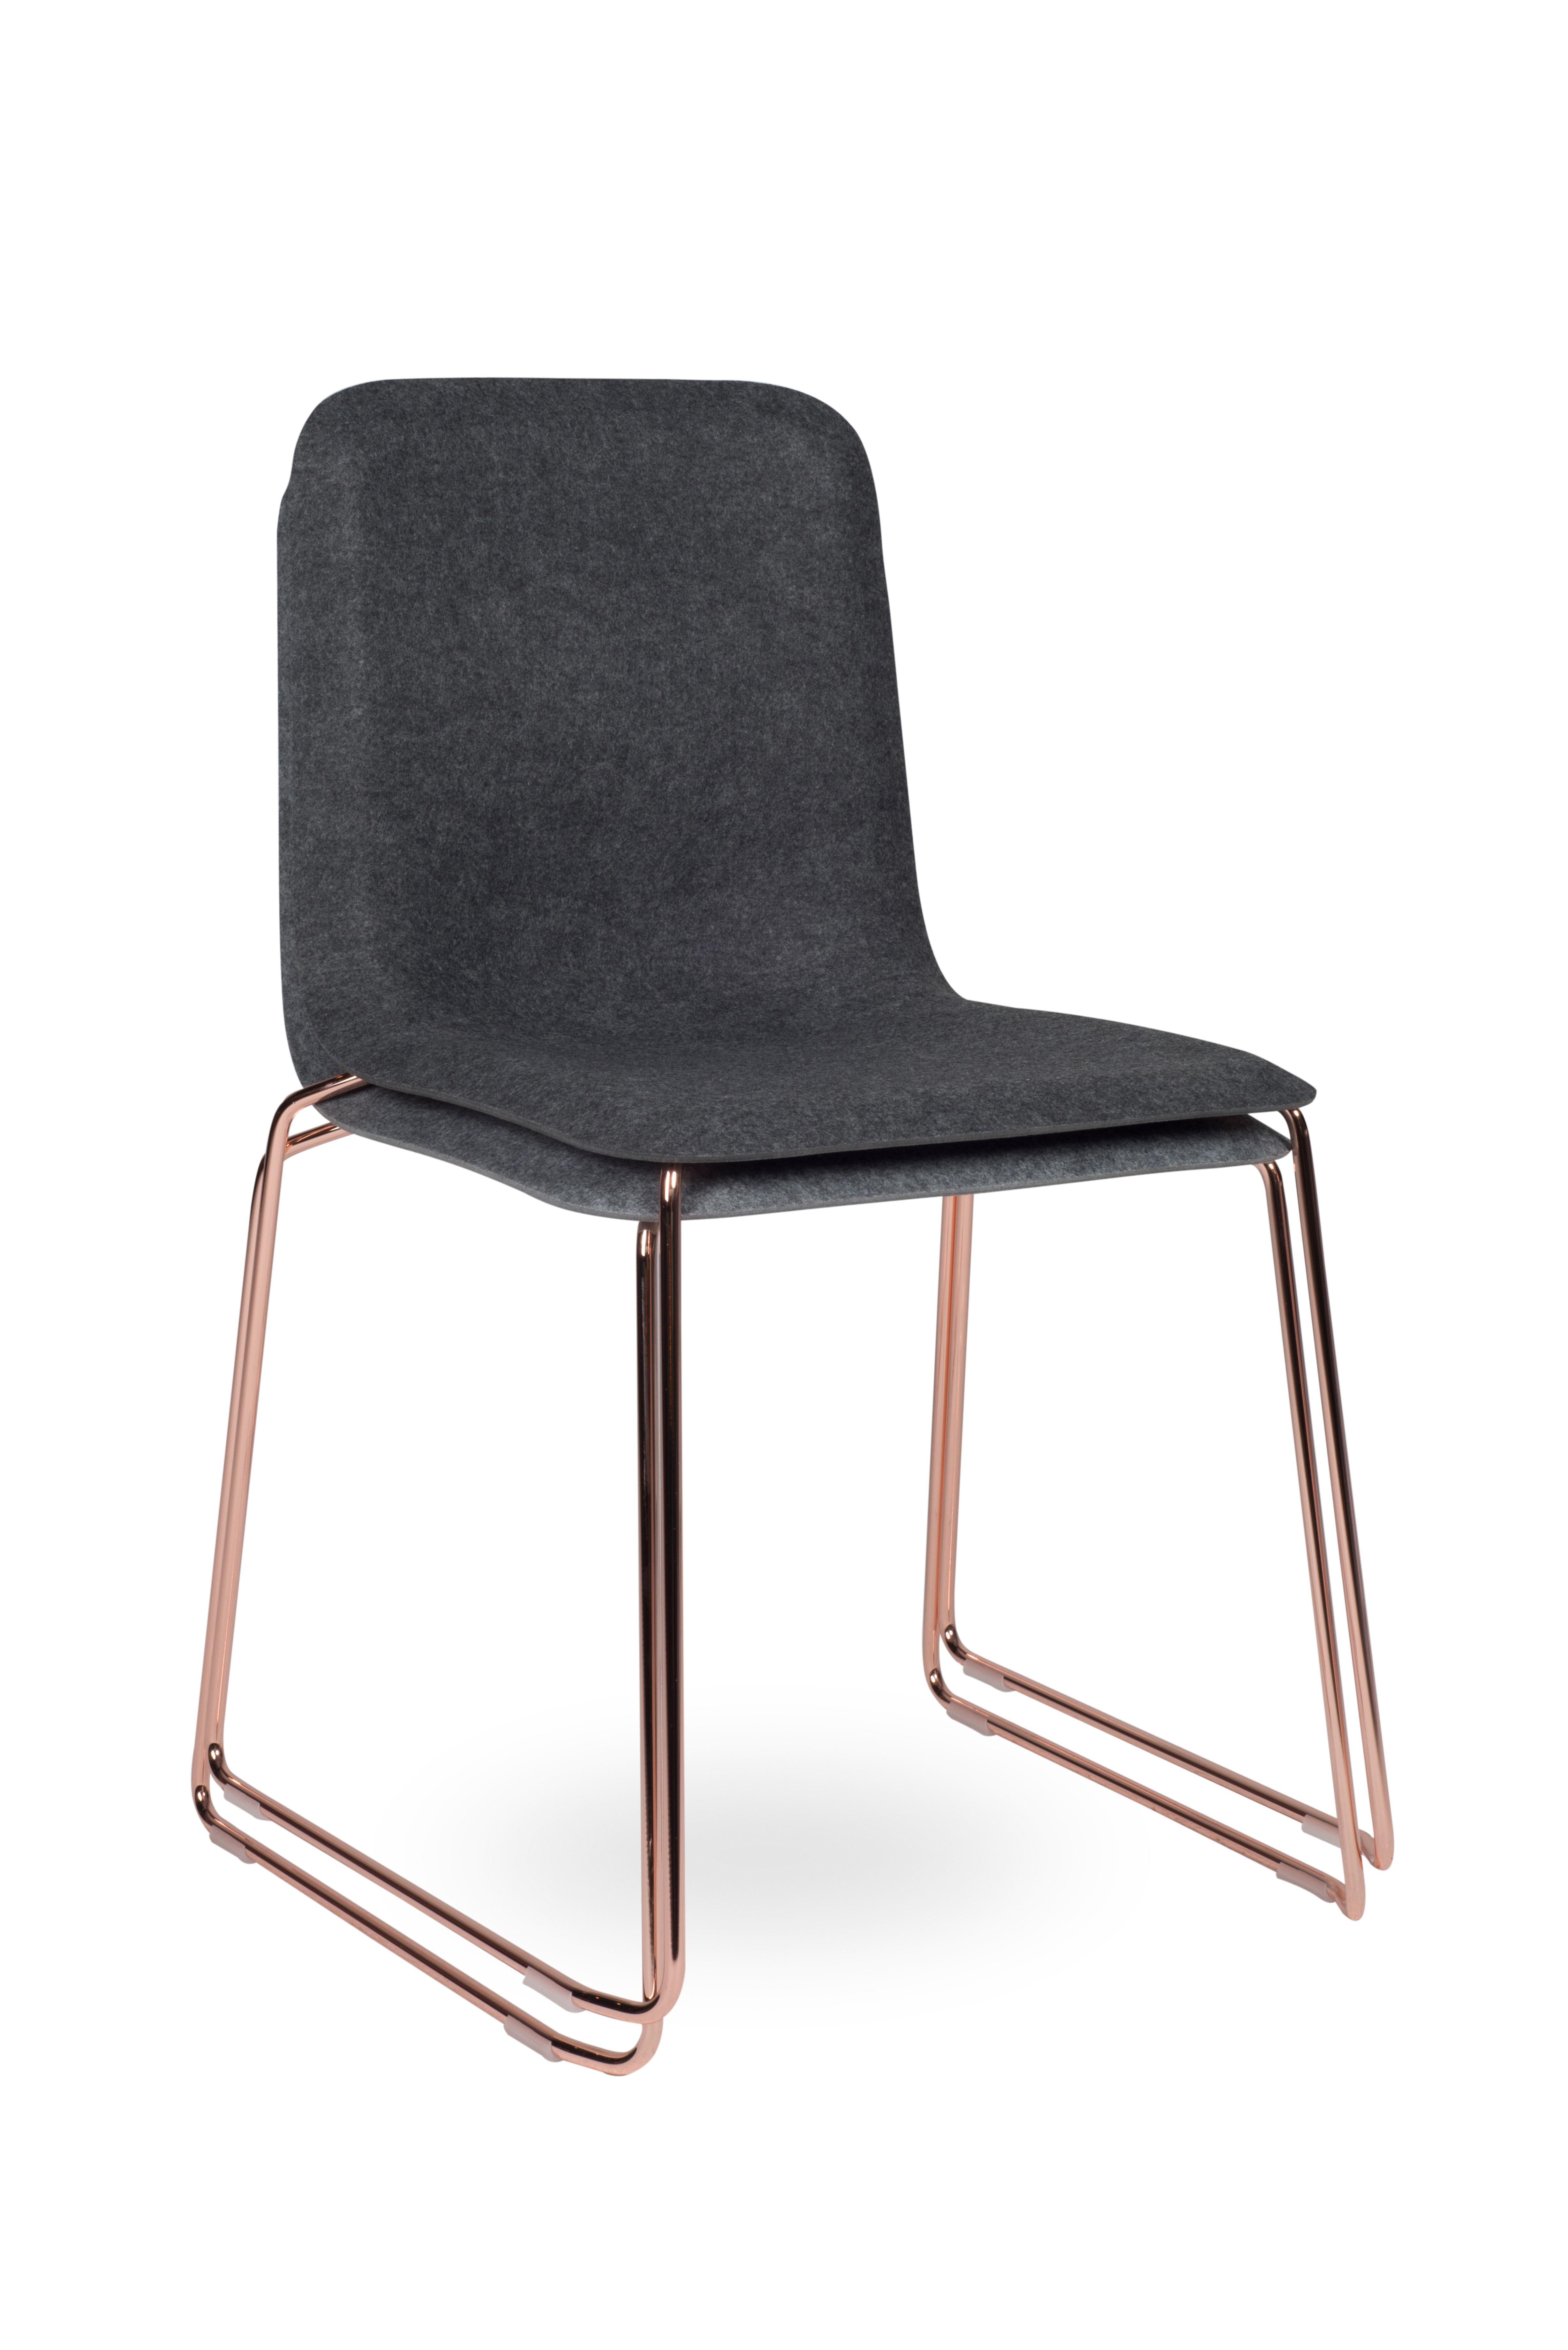 Contemporary Lensvelt This 141 Felt Chair For Sale